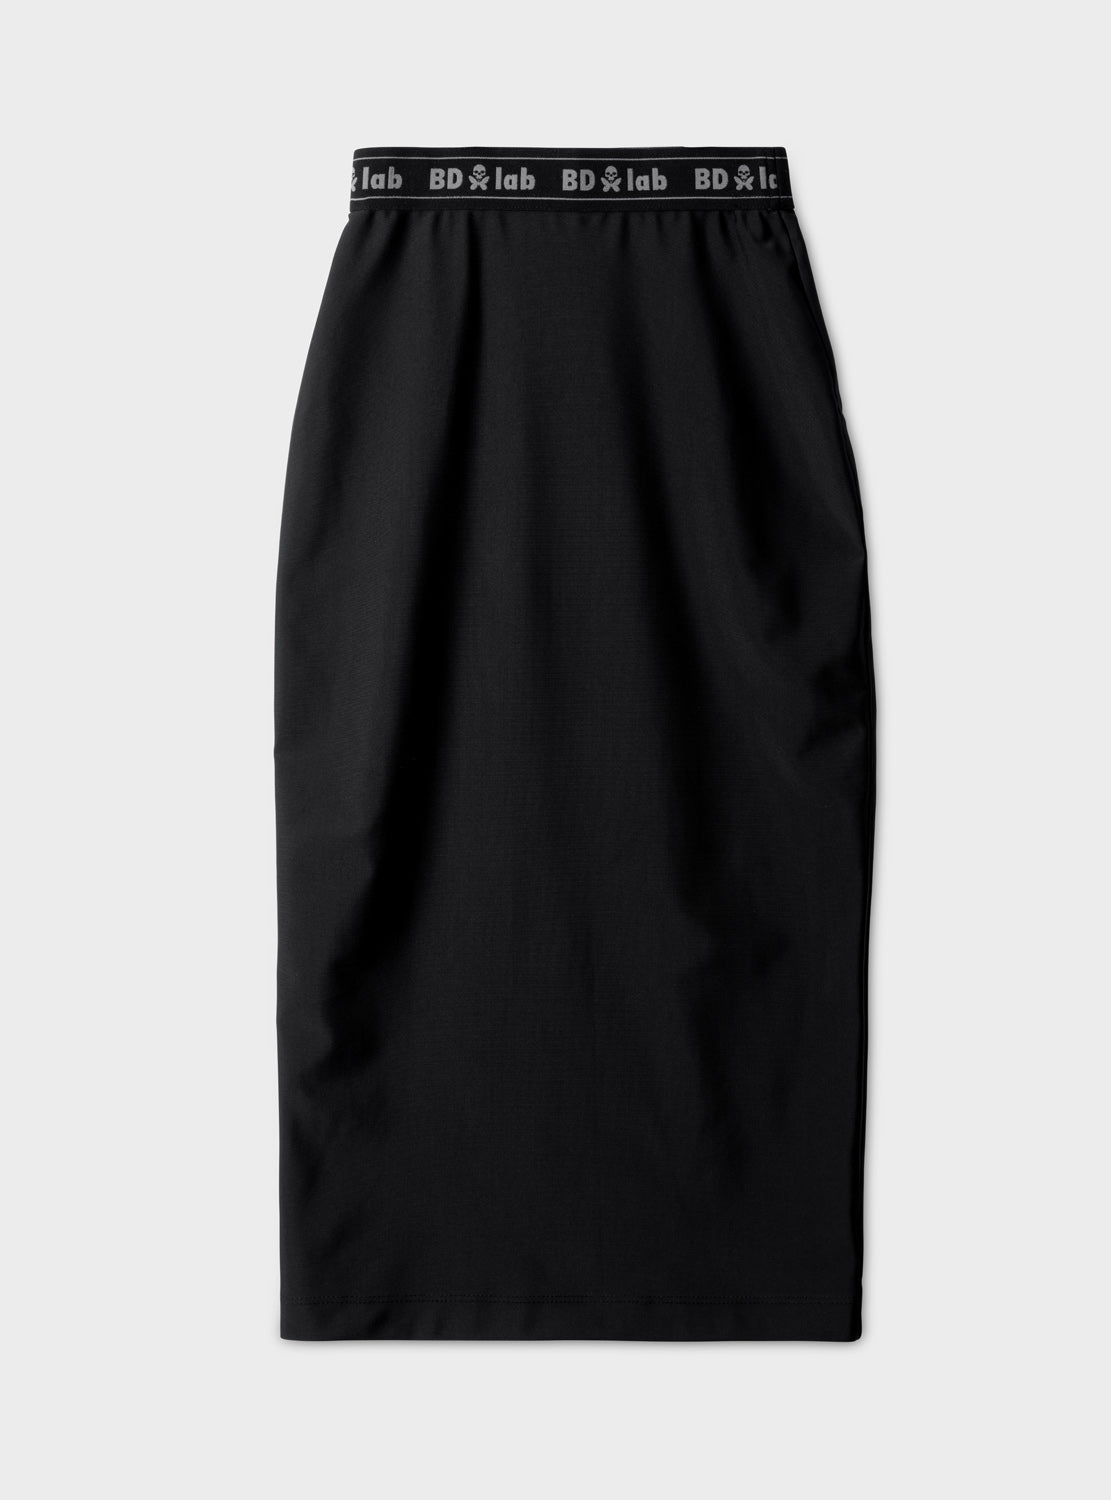 betty designs bdlab sportswear for women skirt